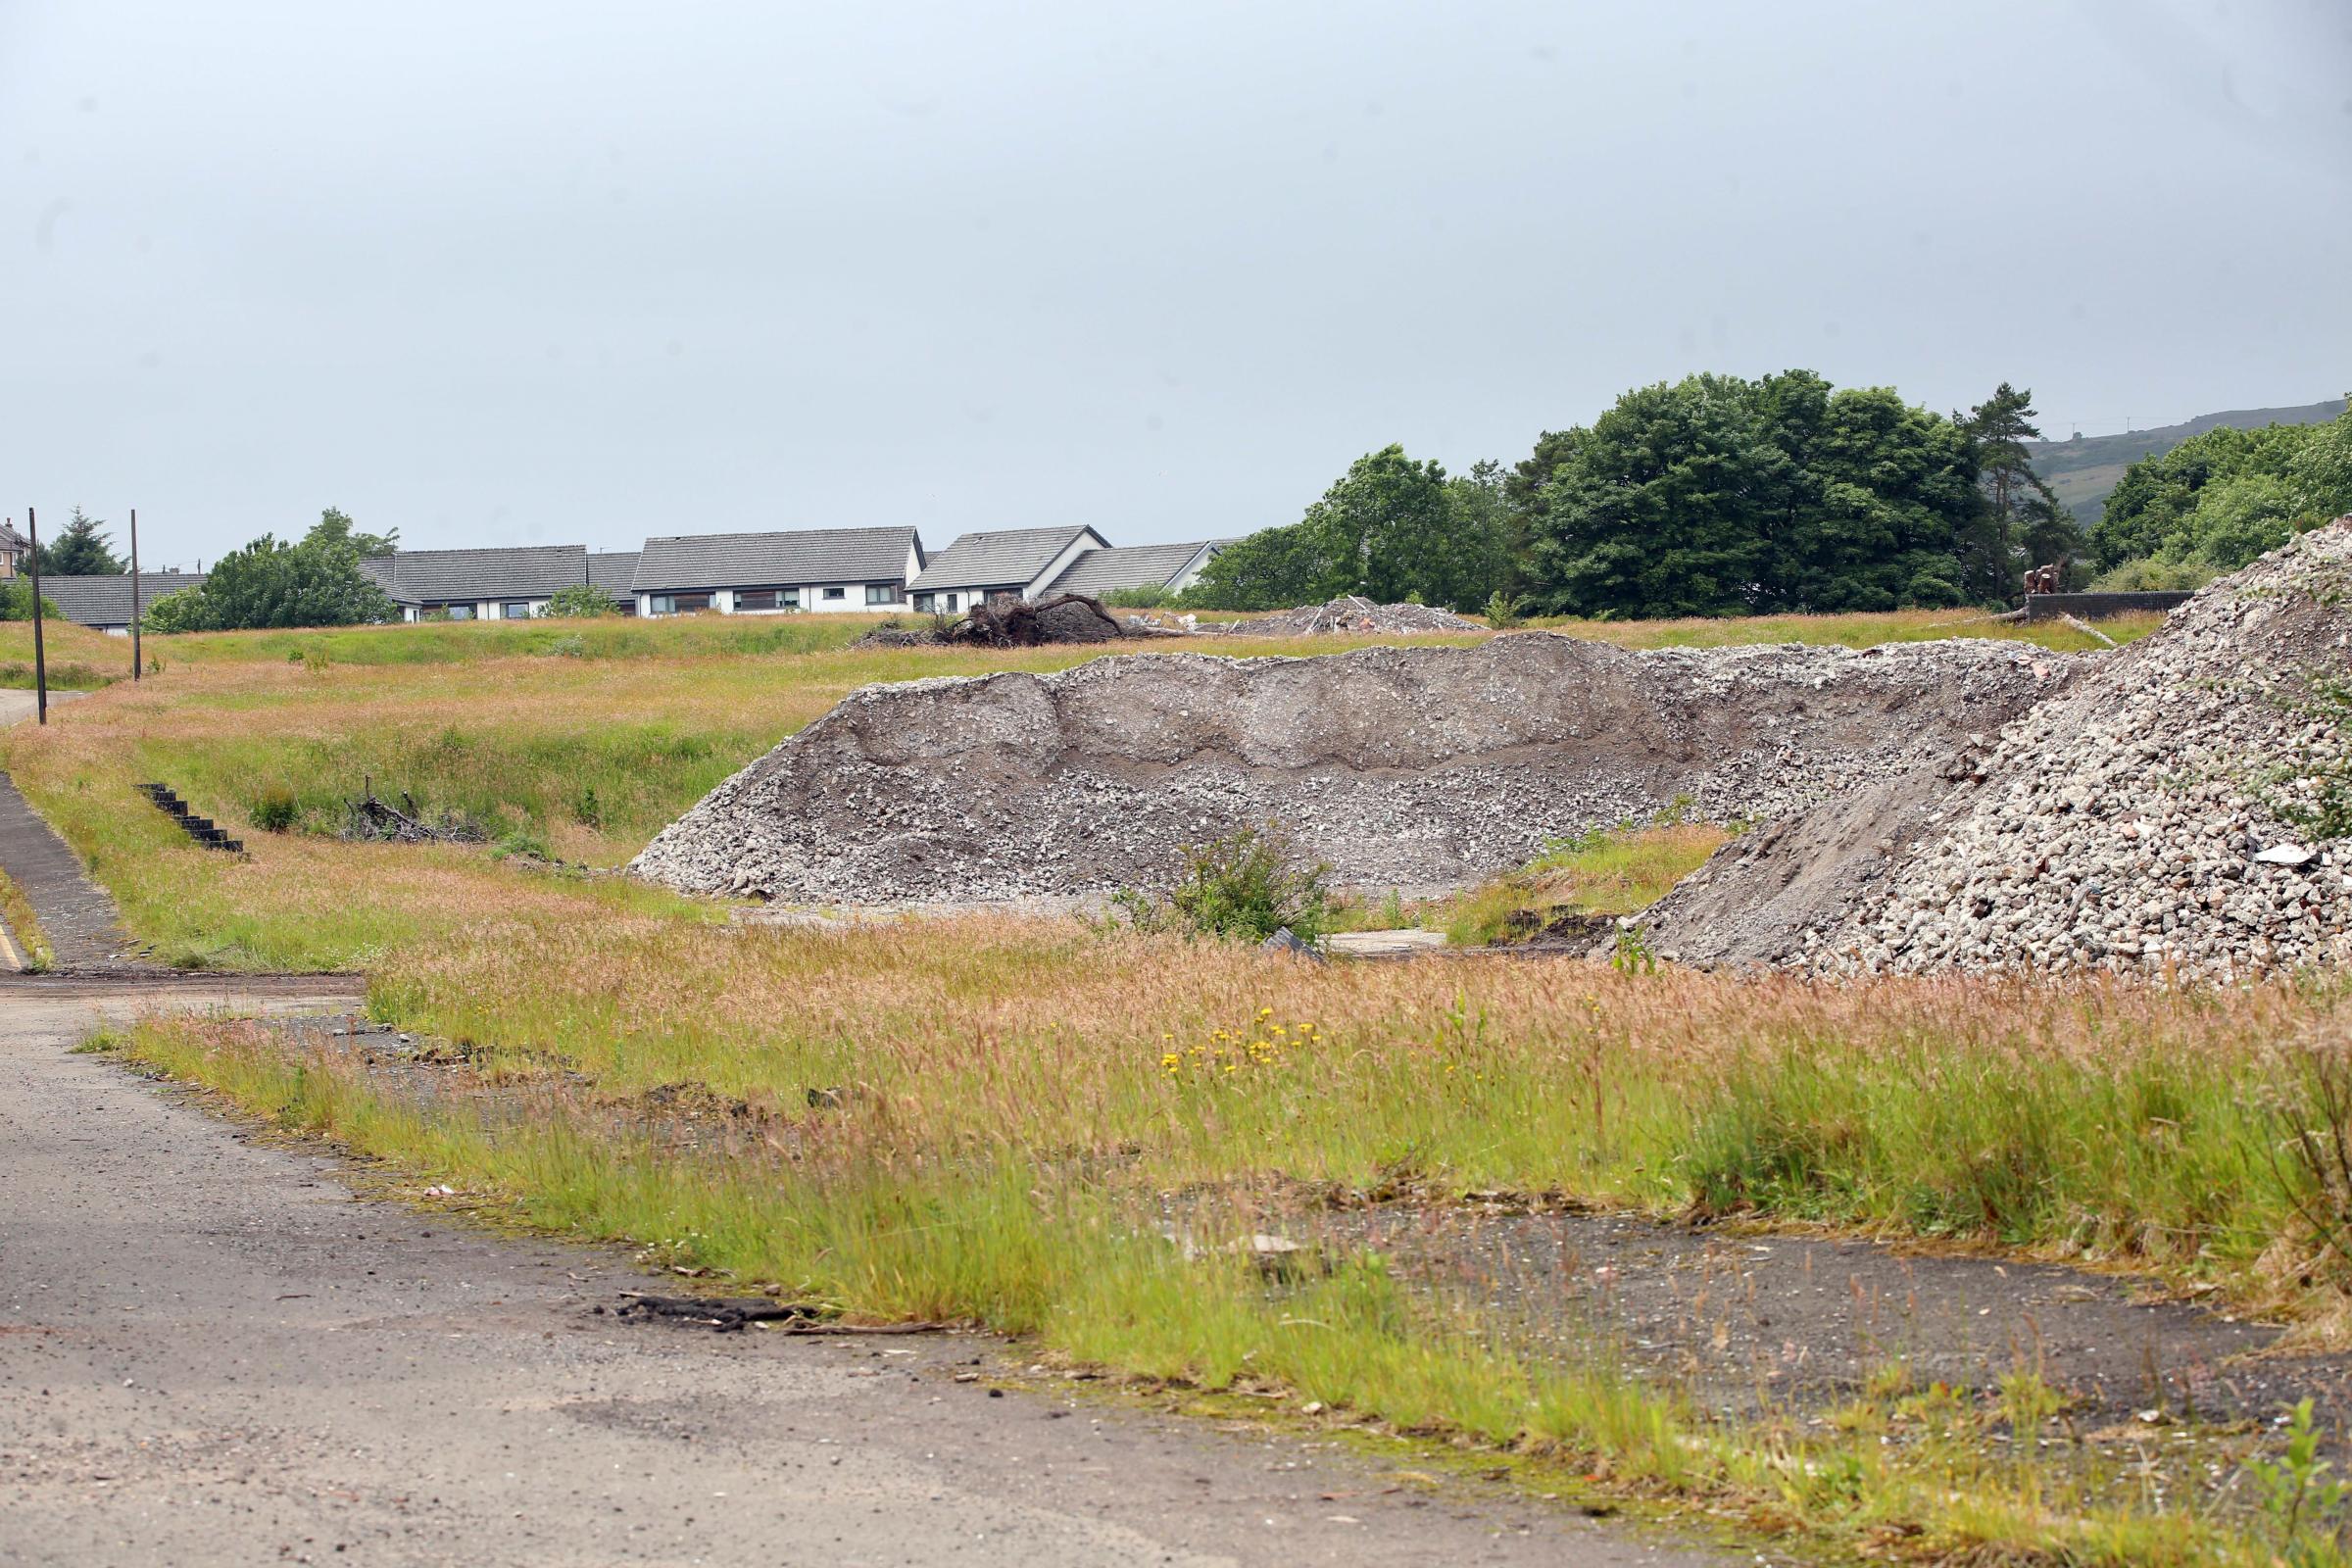 Toxic soil plan for Greenock social housing landscaping project